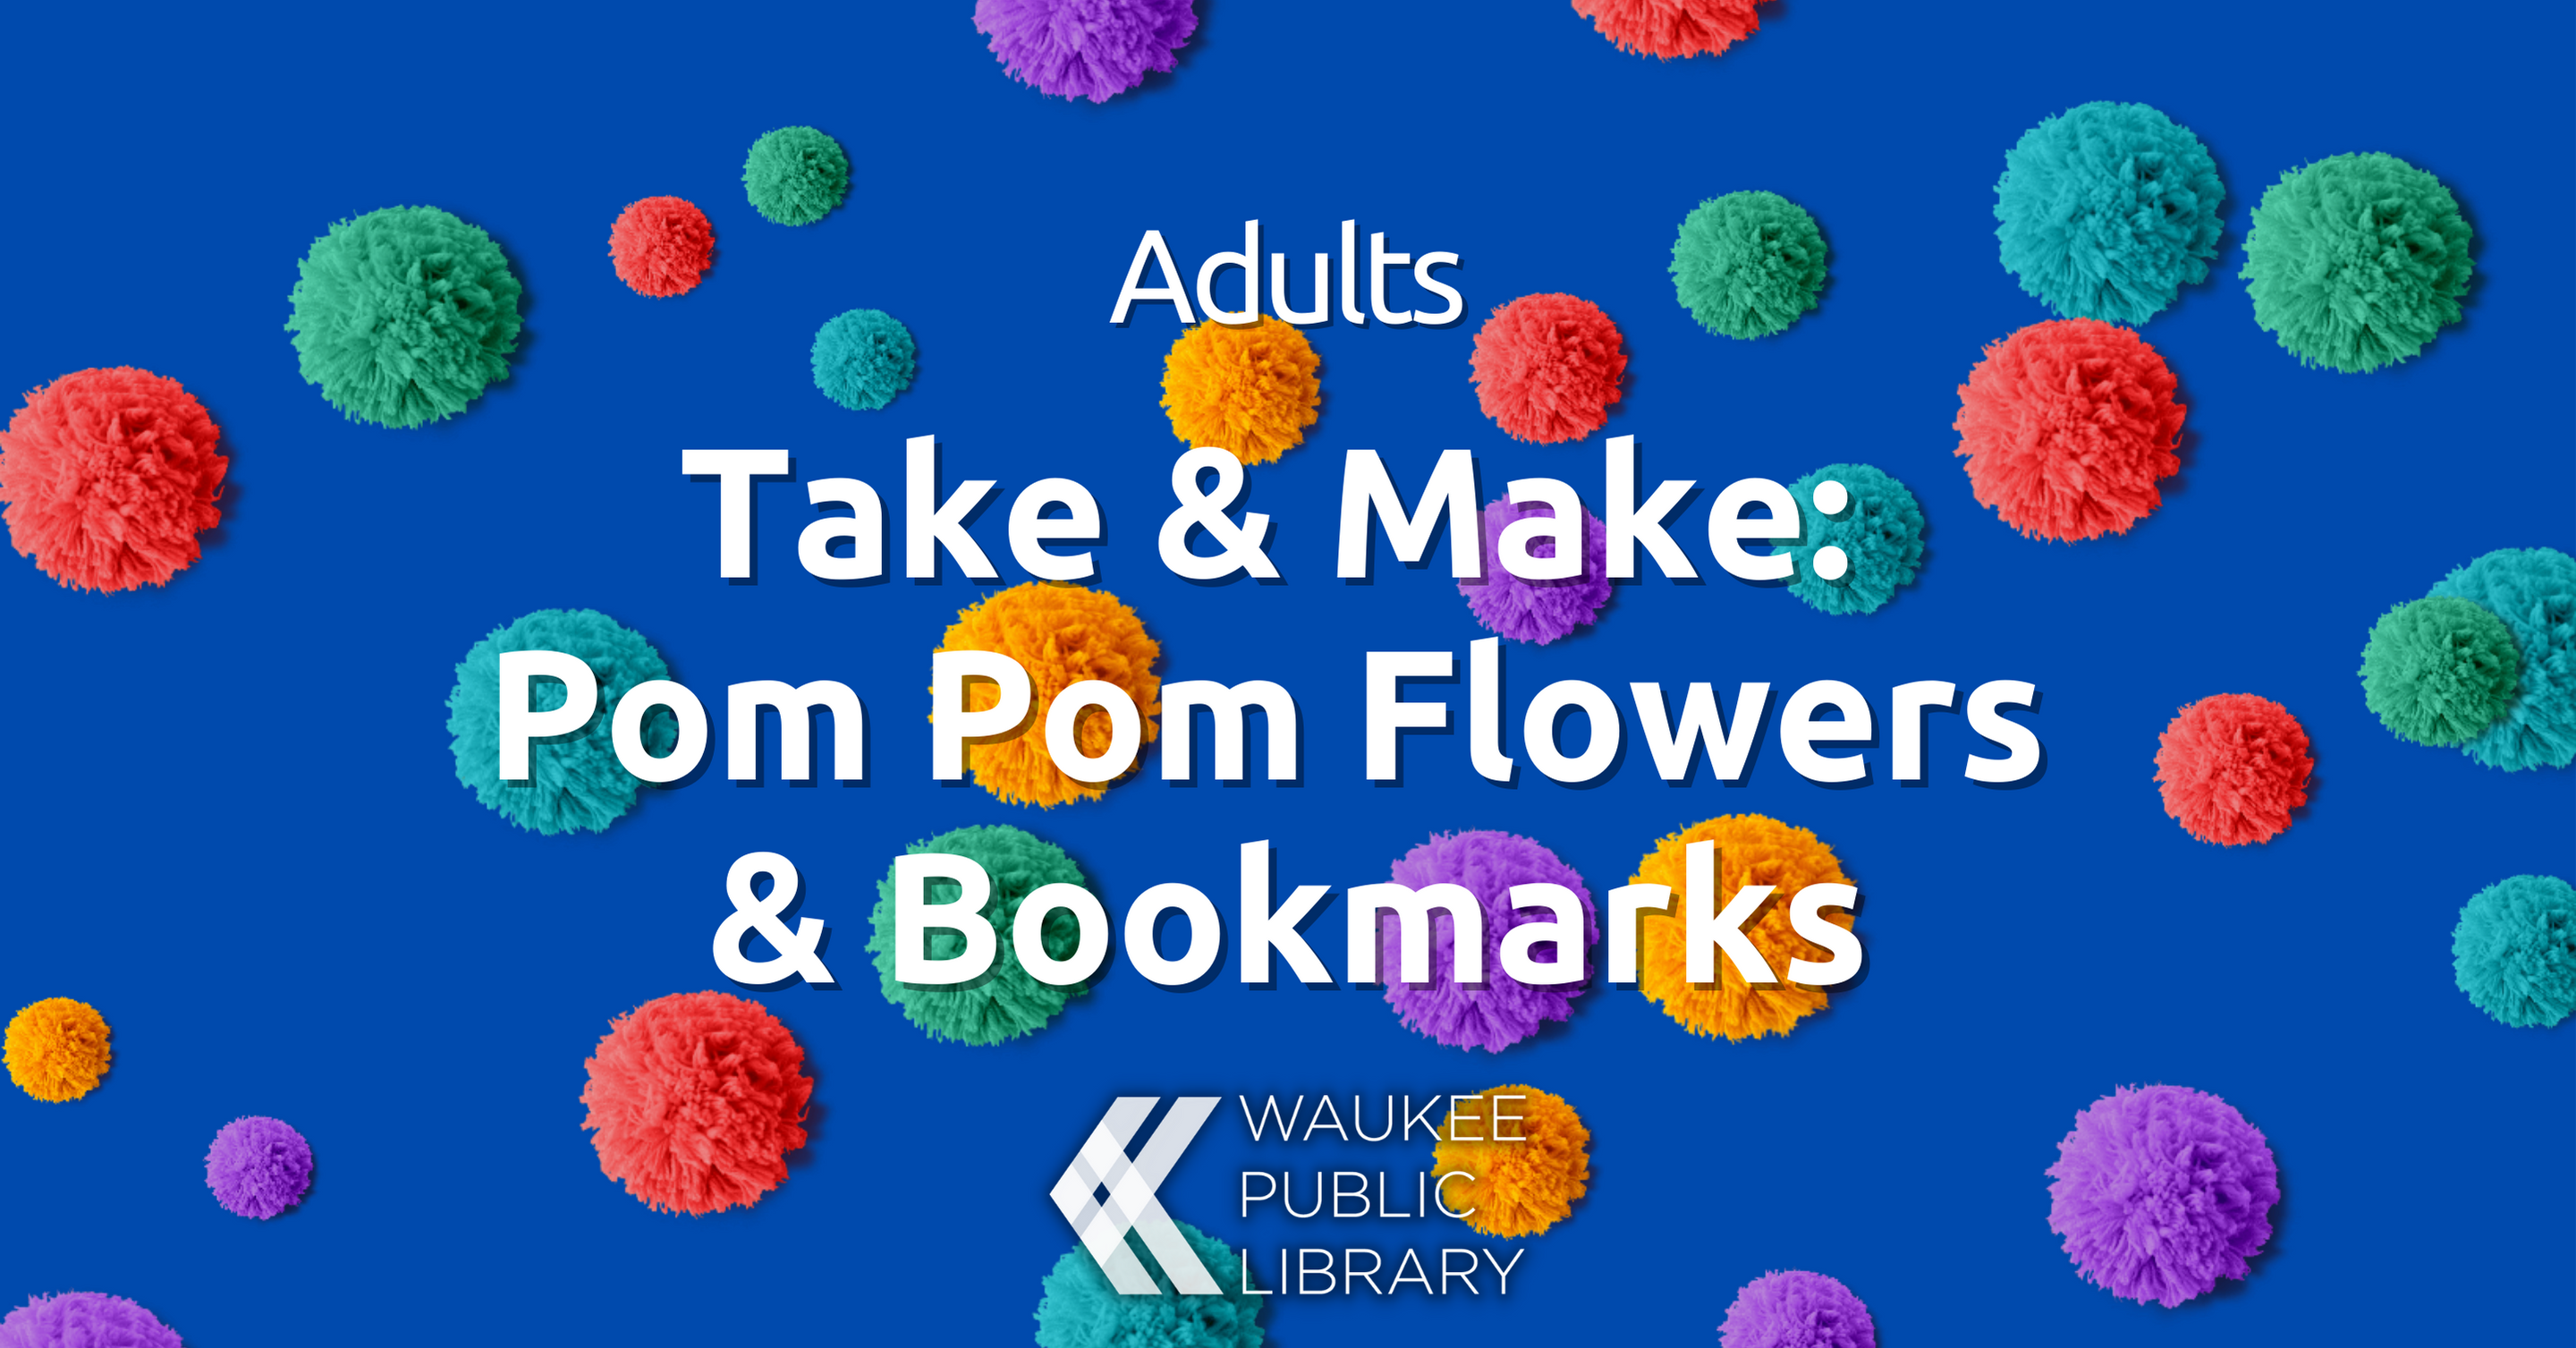 Take & Make: Pom Pom Flowers & Bookmarks 